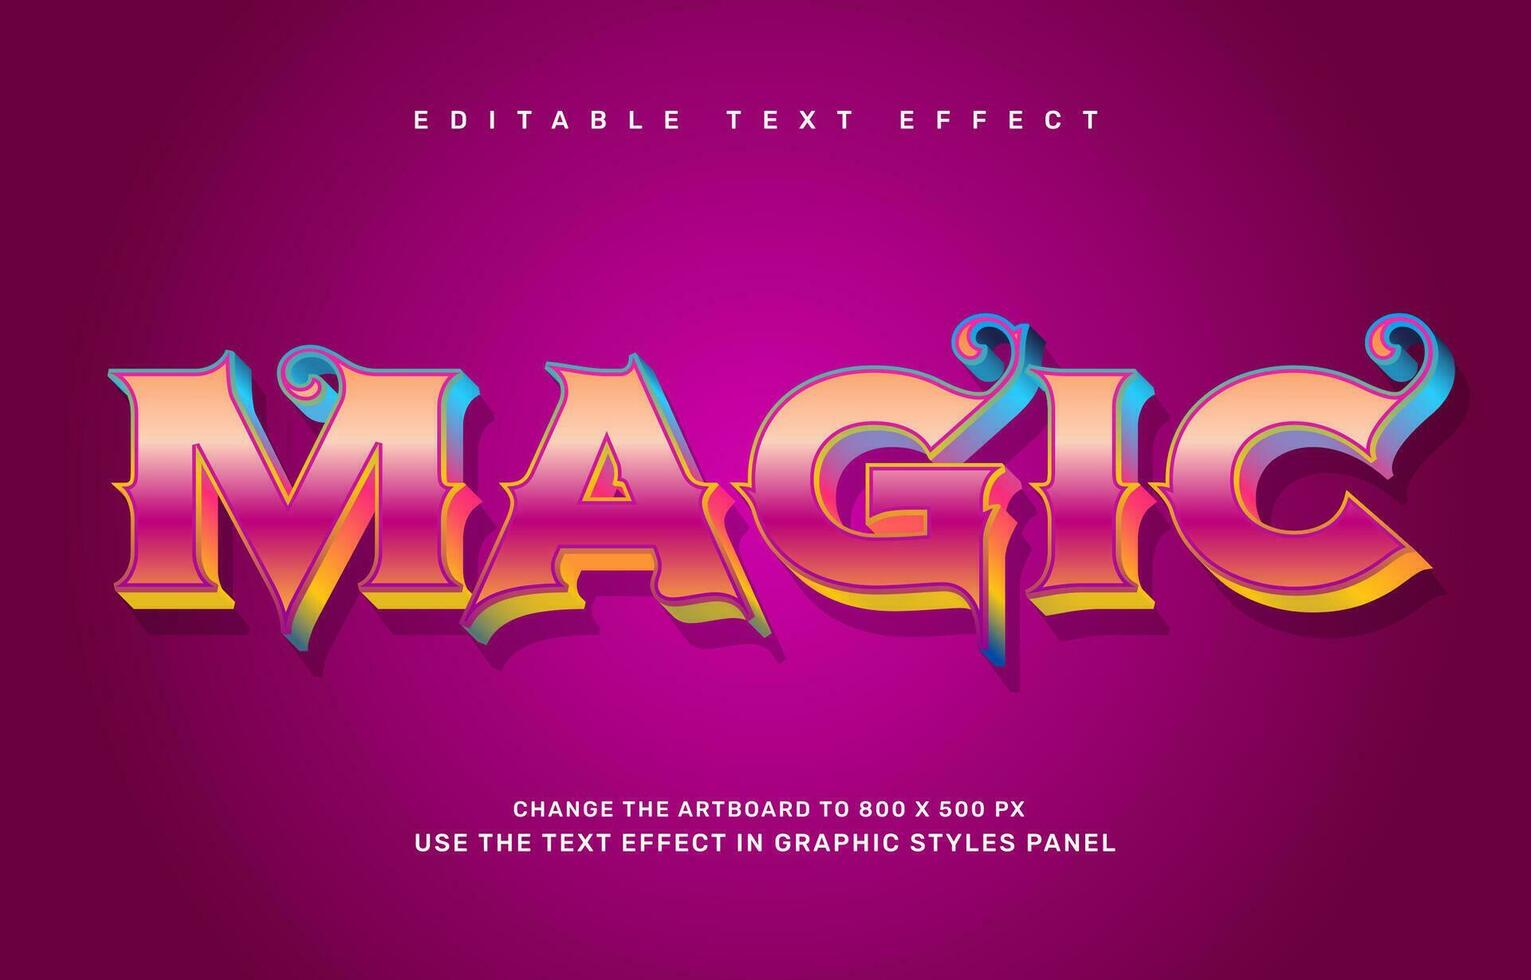 Magic editable text effect template vector